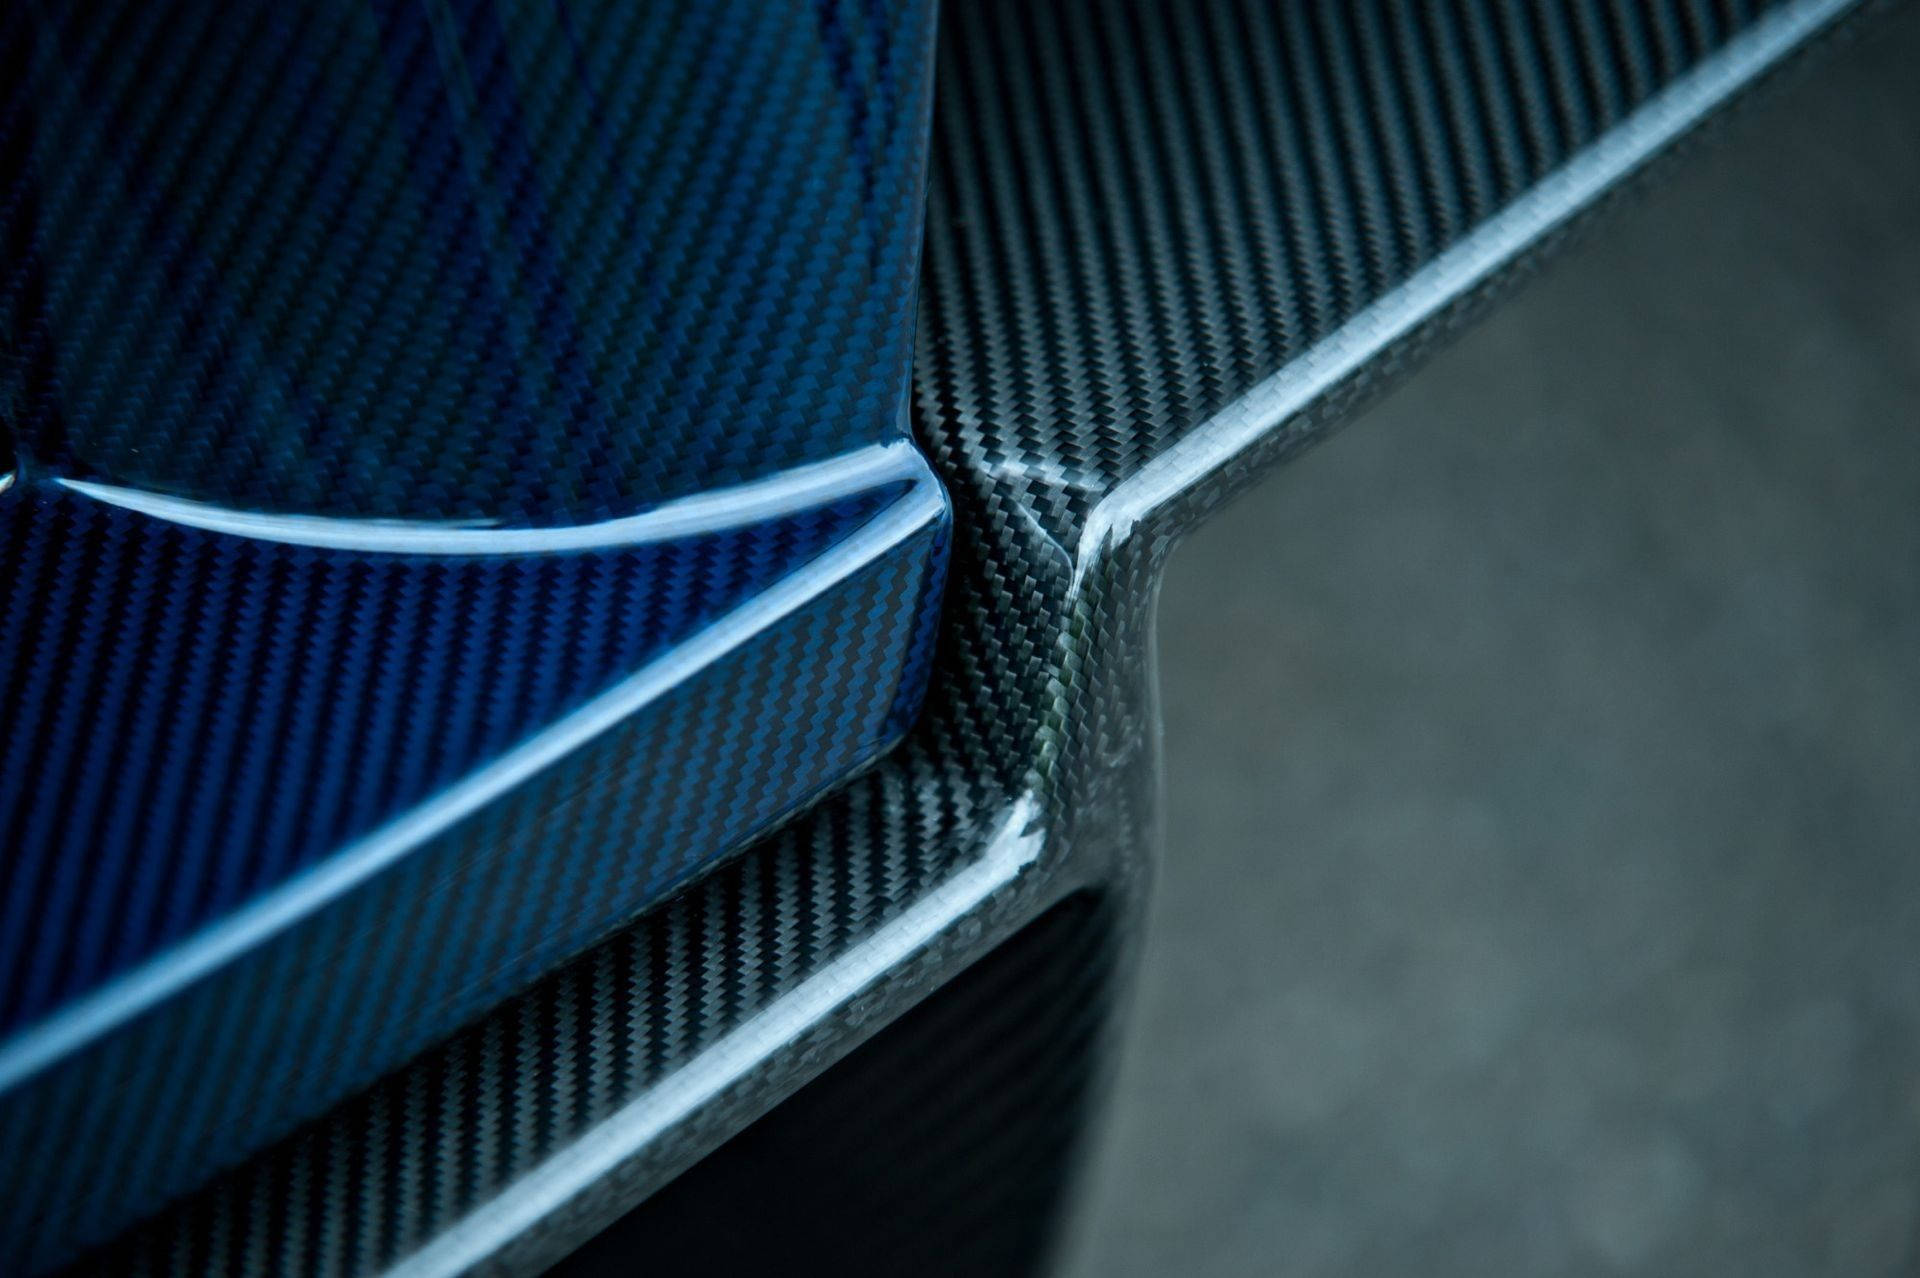 Ultrahigh-Performance Race Car with Carbon Fiber Exterior Wallpaper